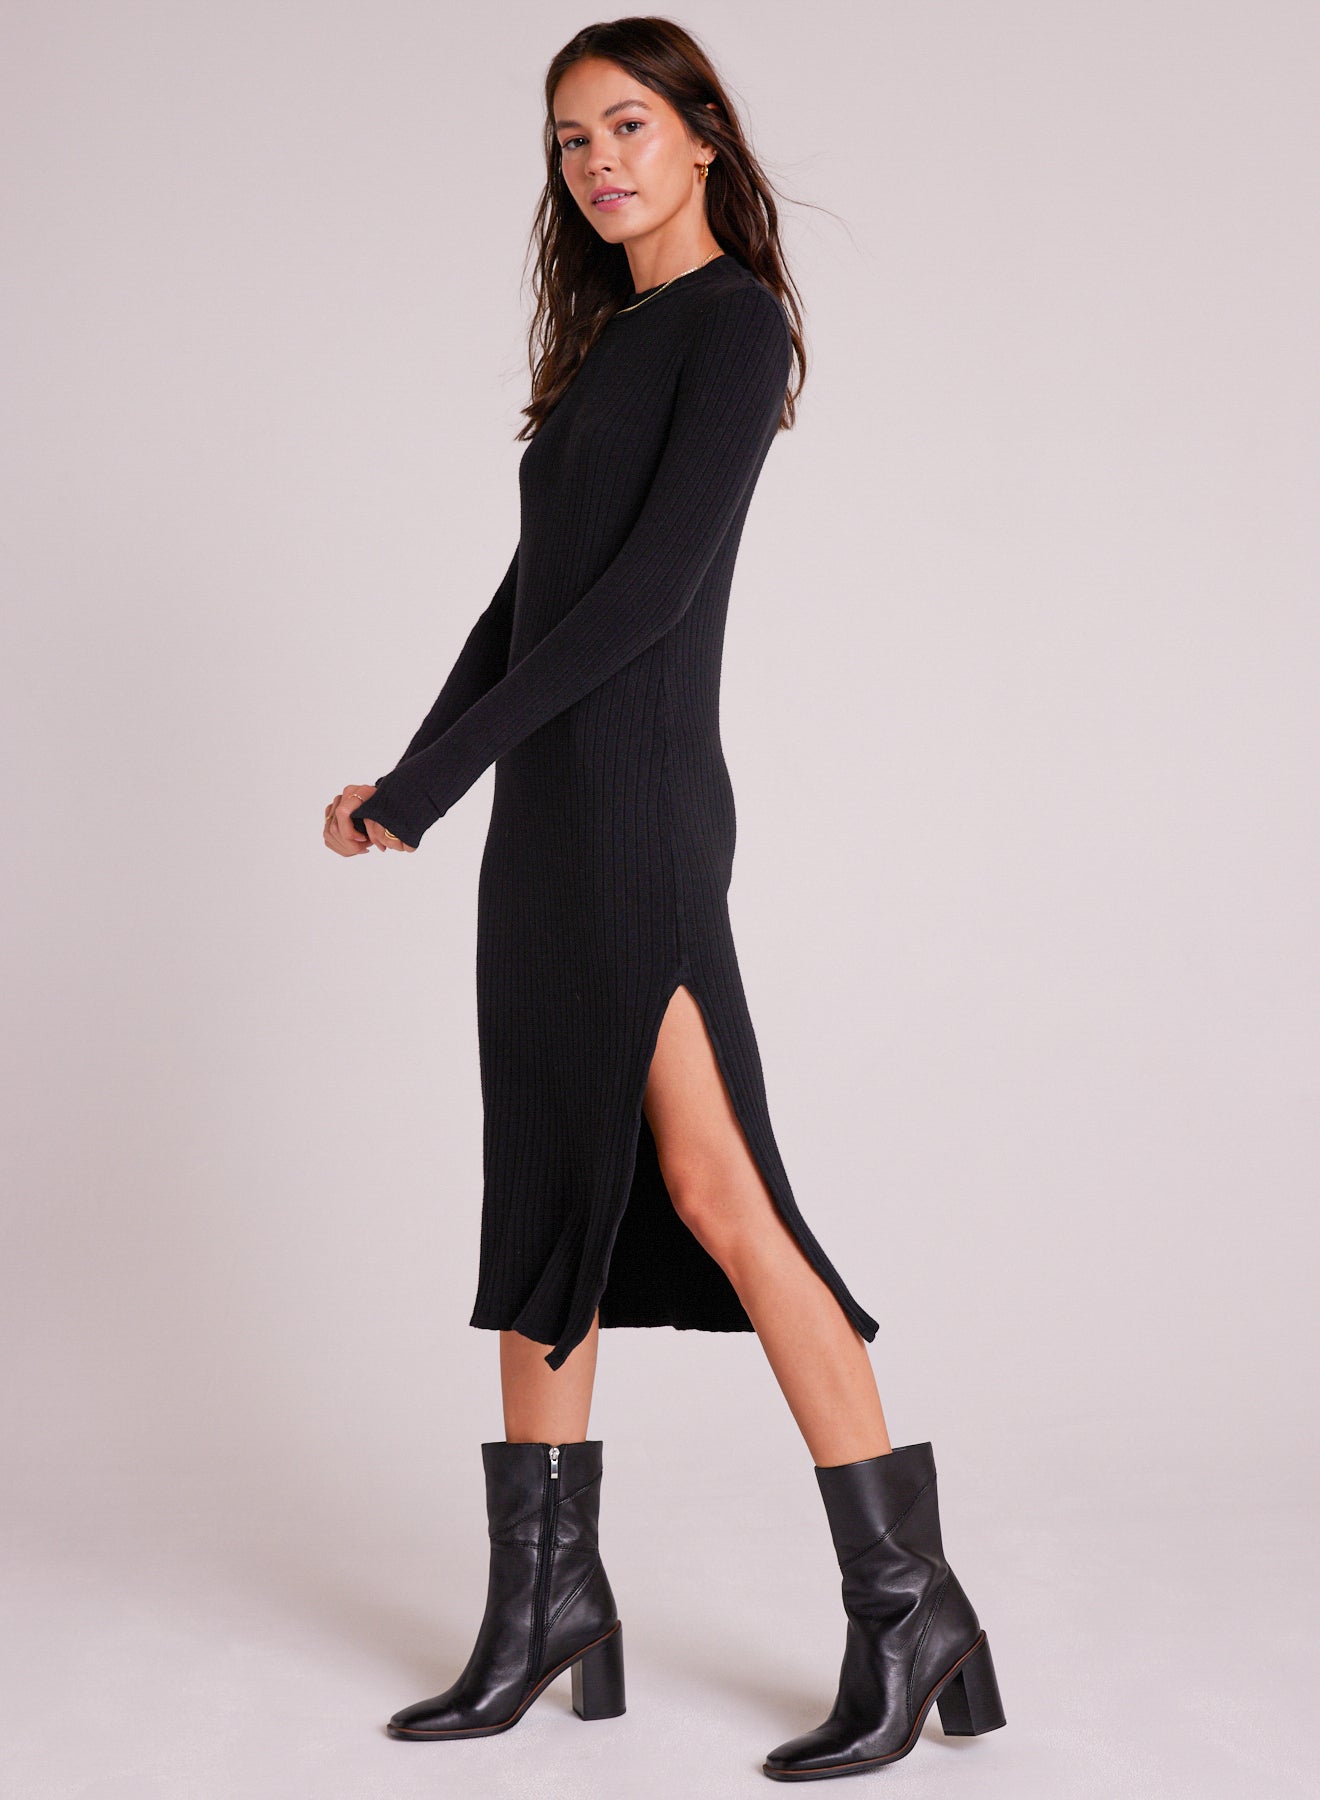 Bella DahlMock Neck Midi Knit Dress - BlackDresses